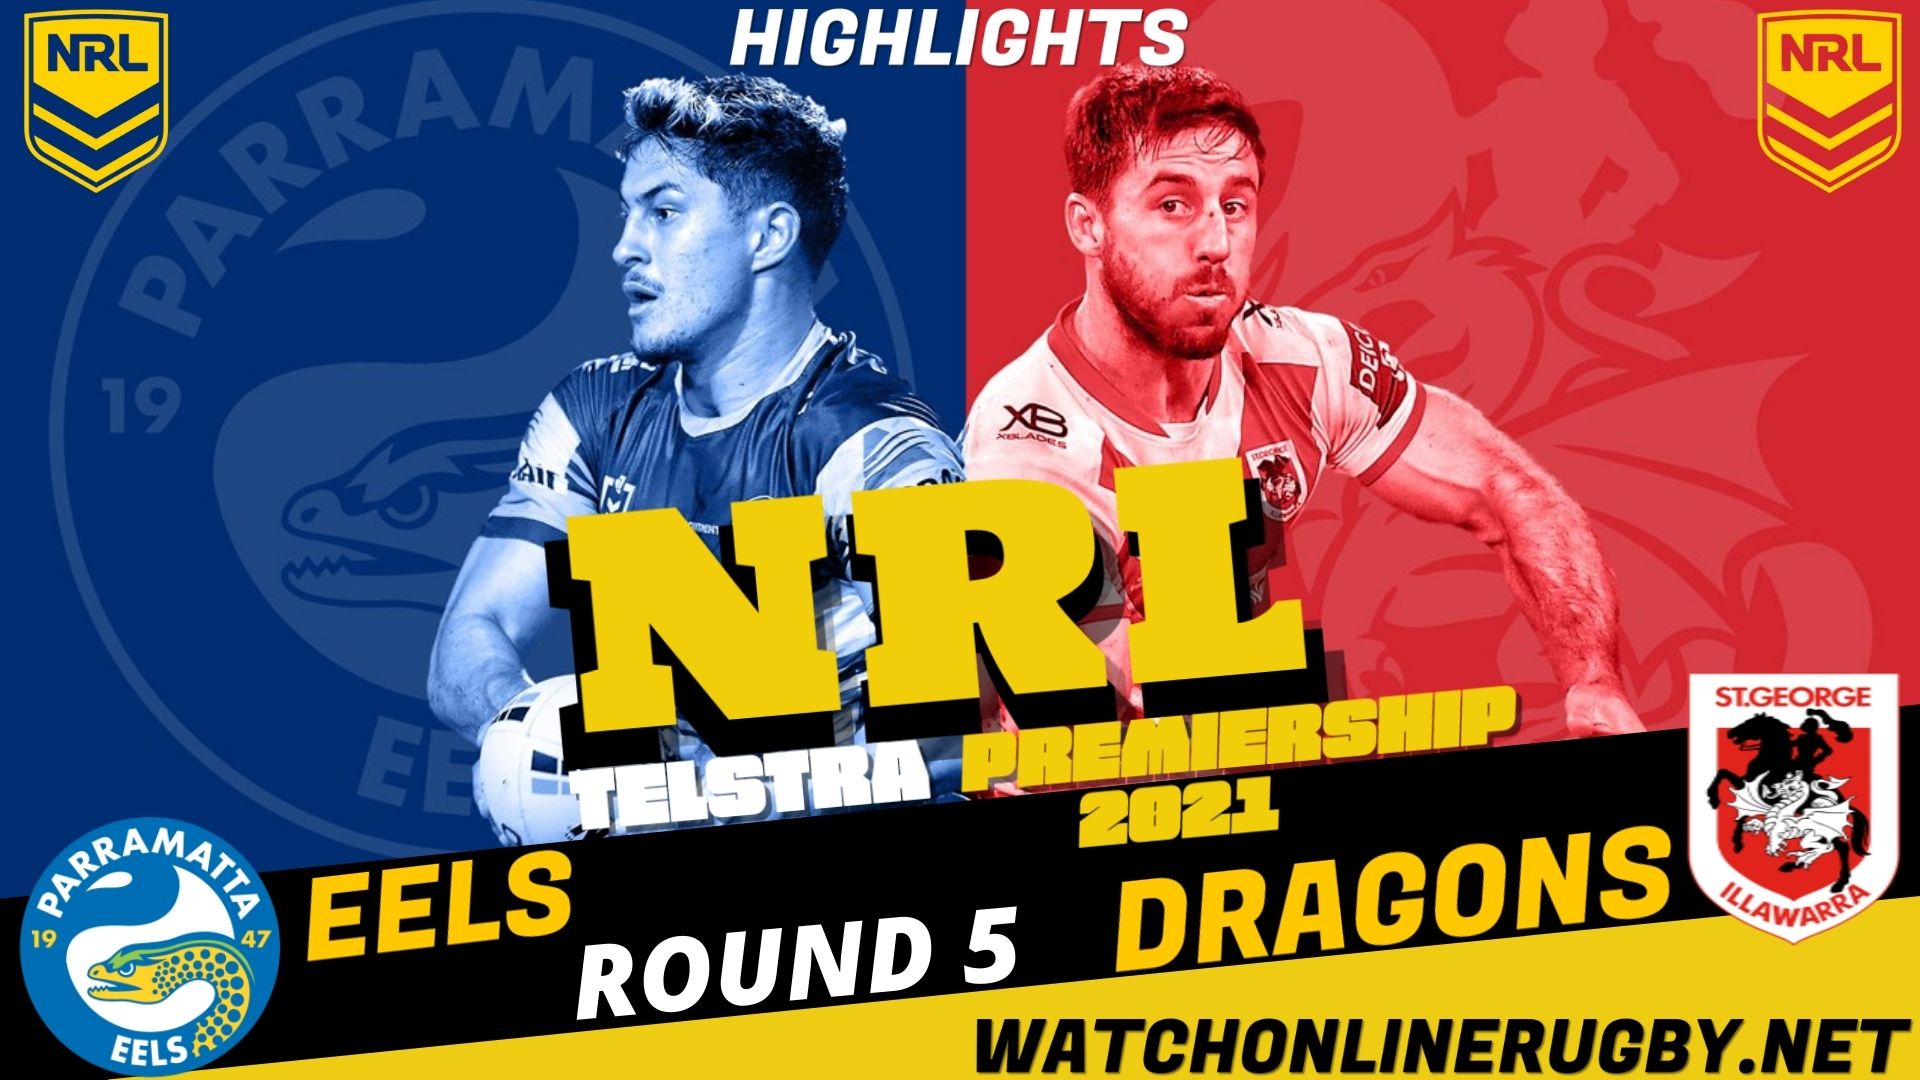 Eels Vs Dragons Highlights RD 5 NRL Rugby